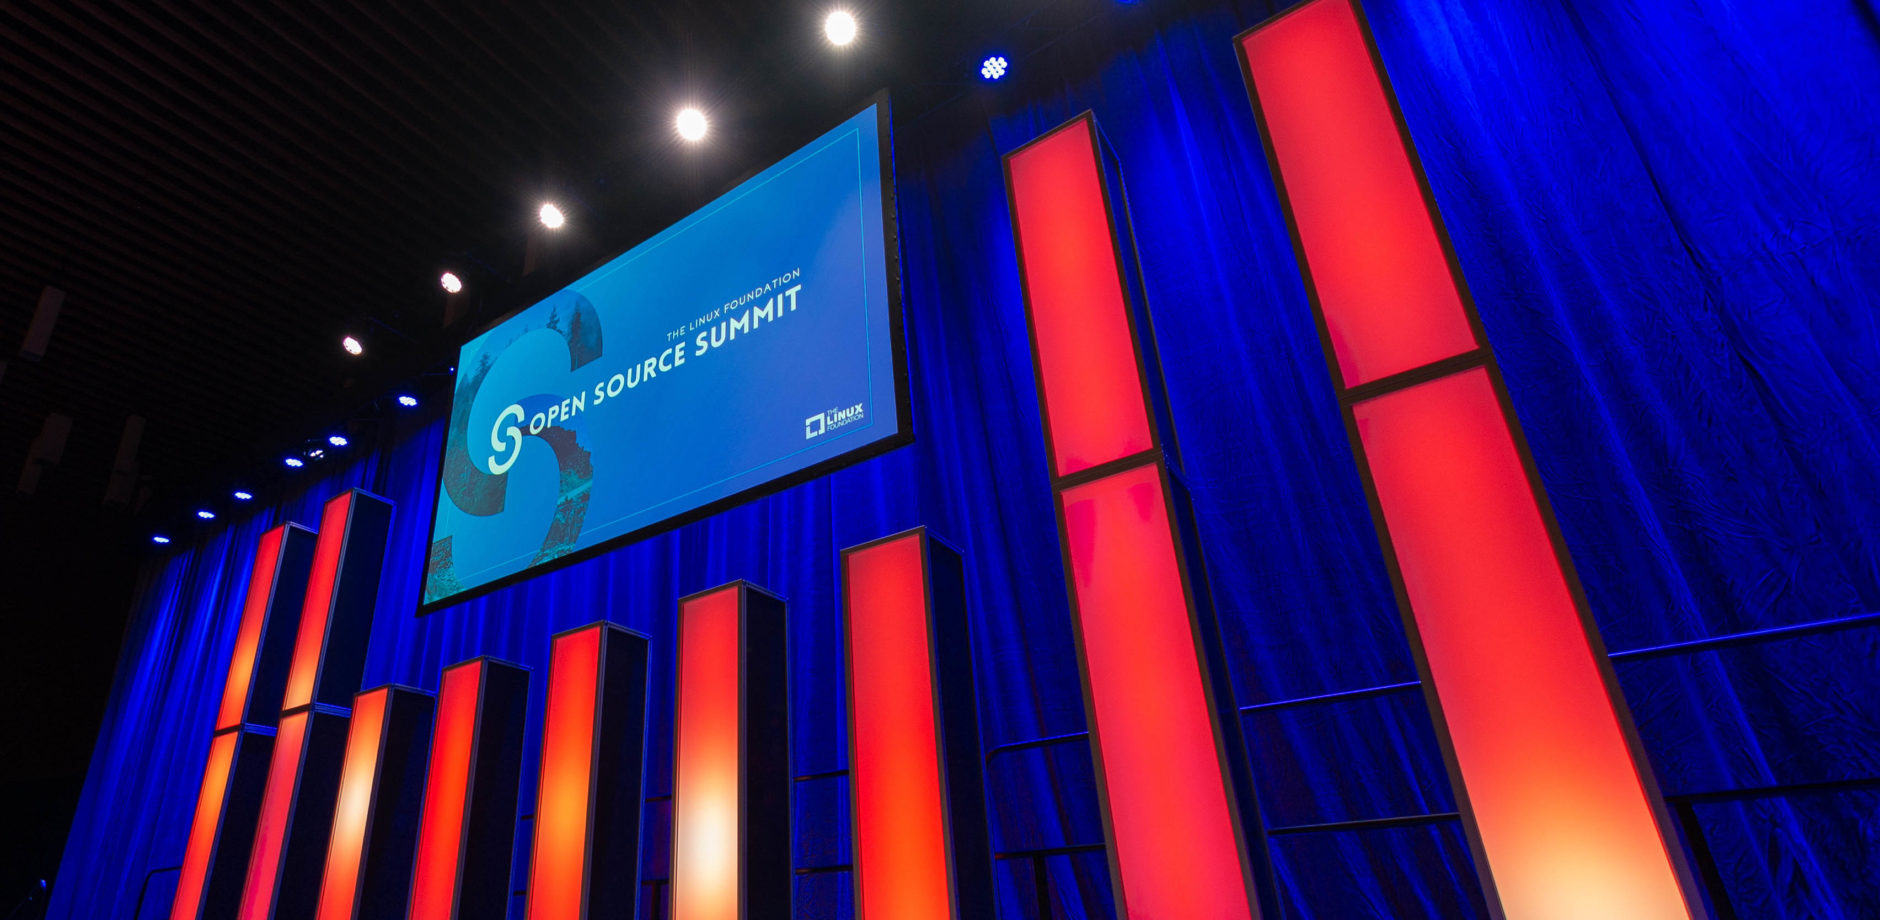 Linux Foundation – Open Source Summit North America | AV Strategies